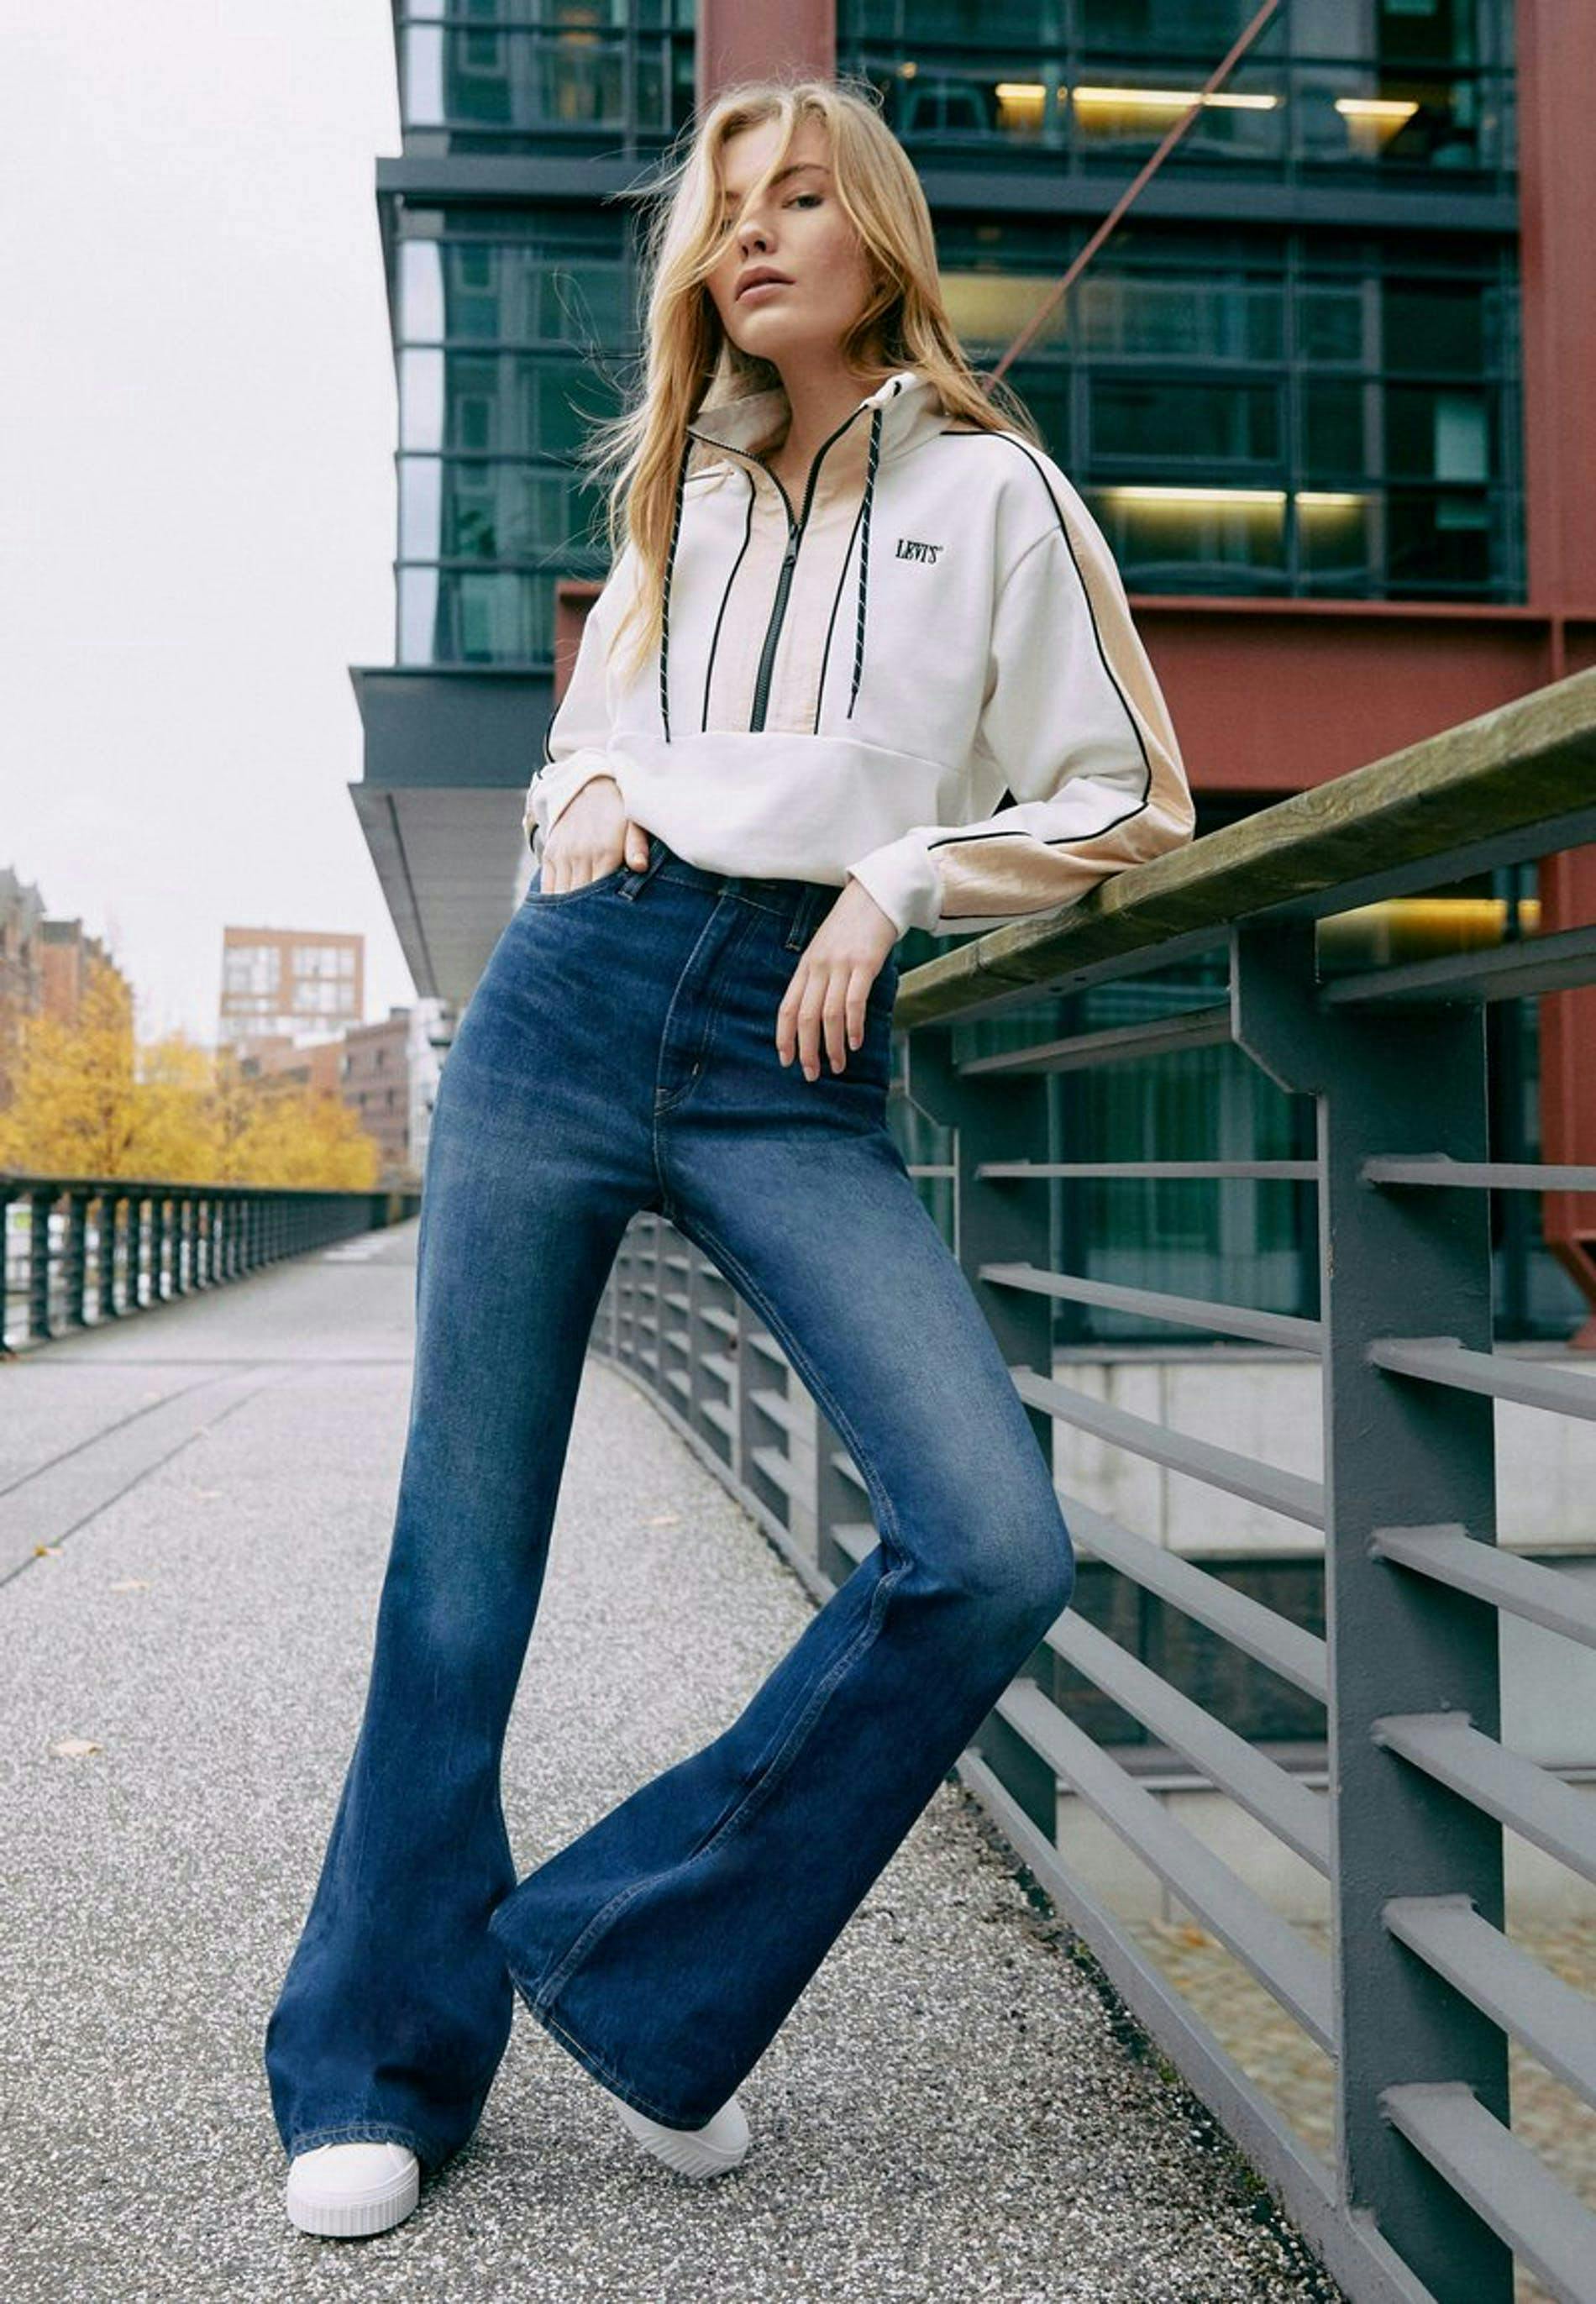 jeans denim clothing pants apparel person human sleeve female